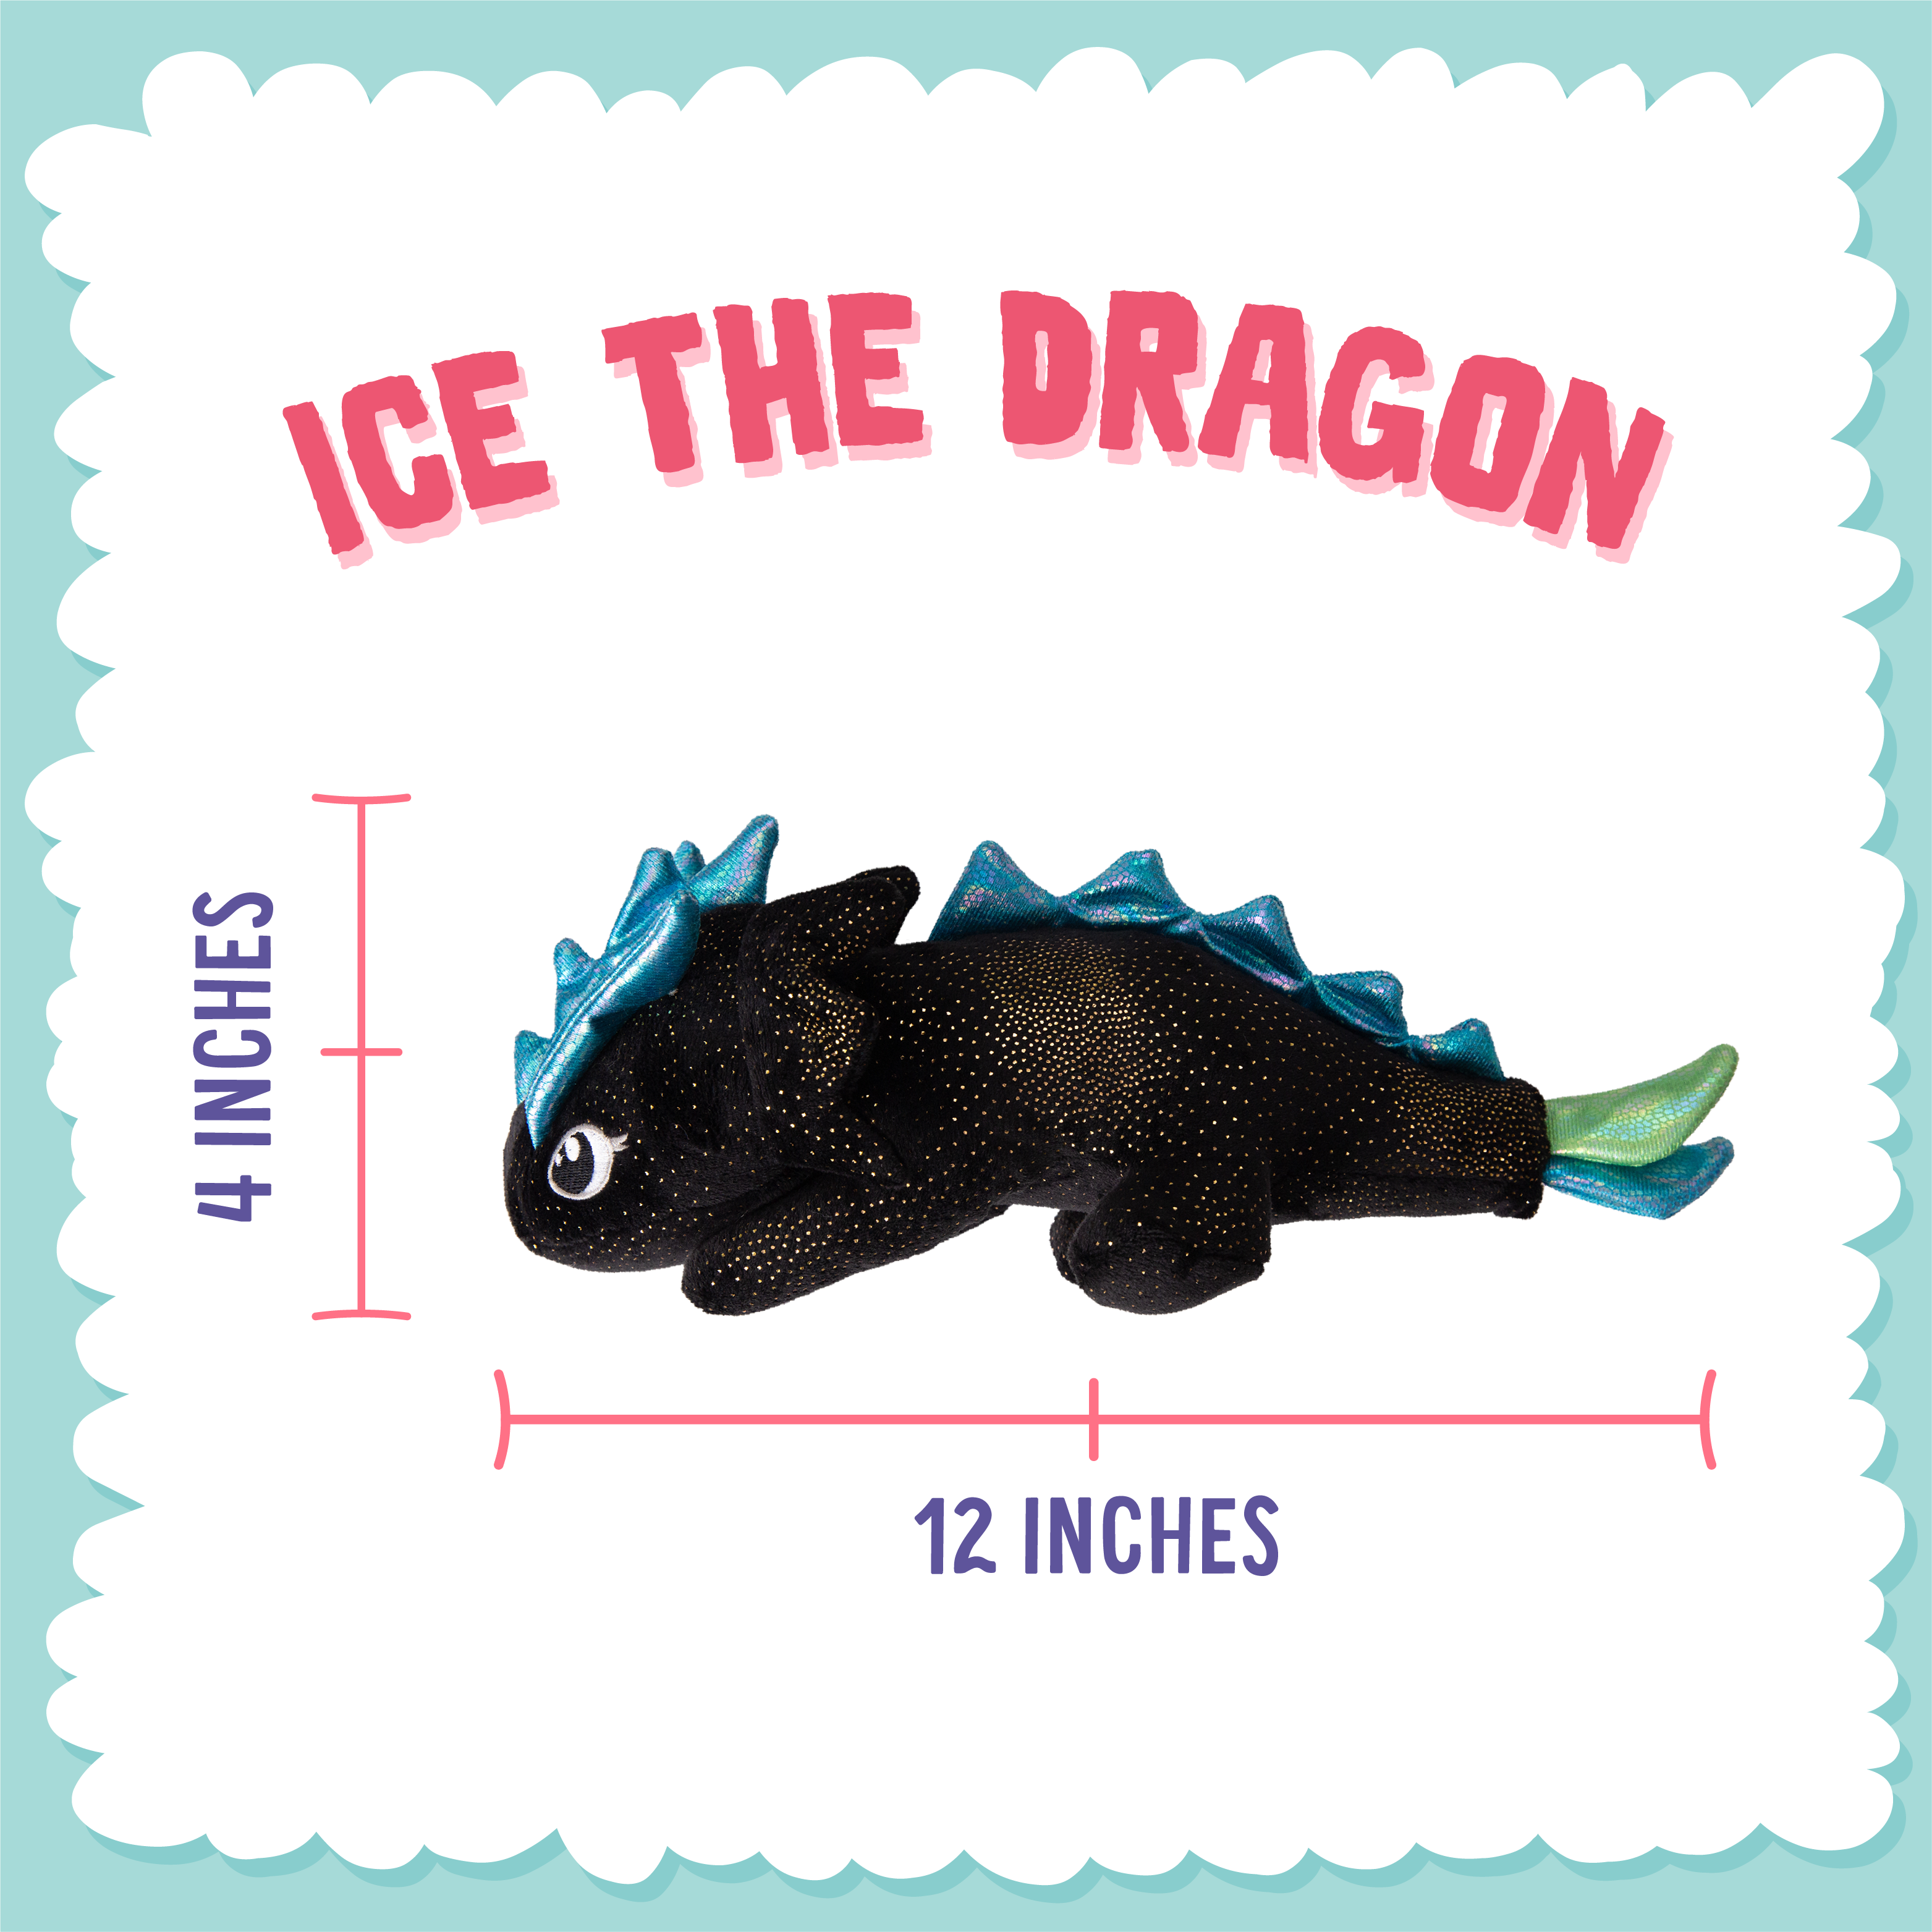 Ice the Dragon